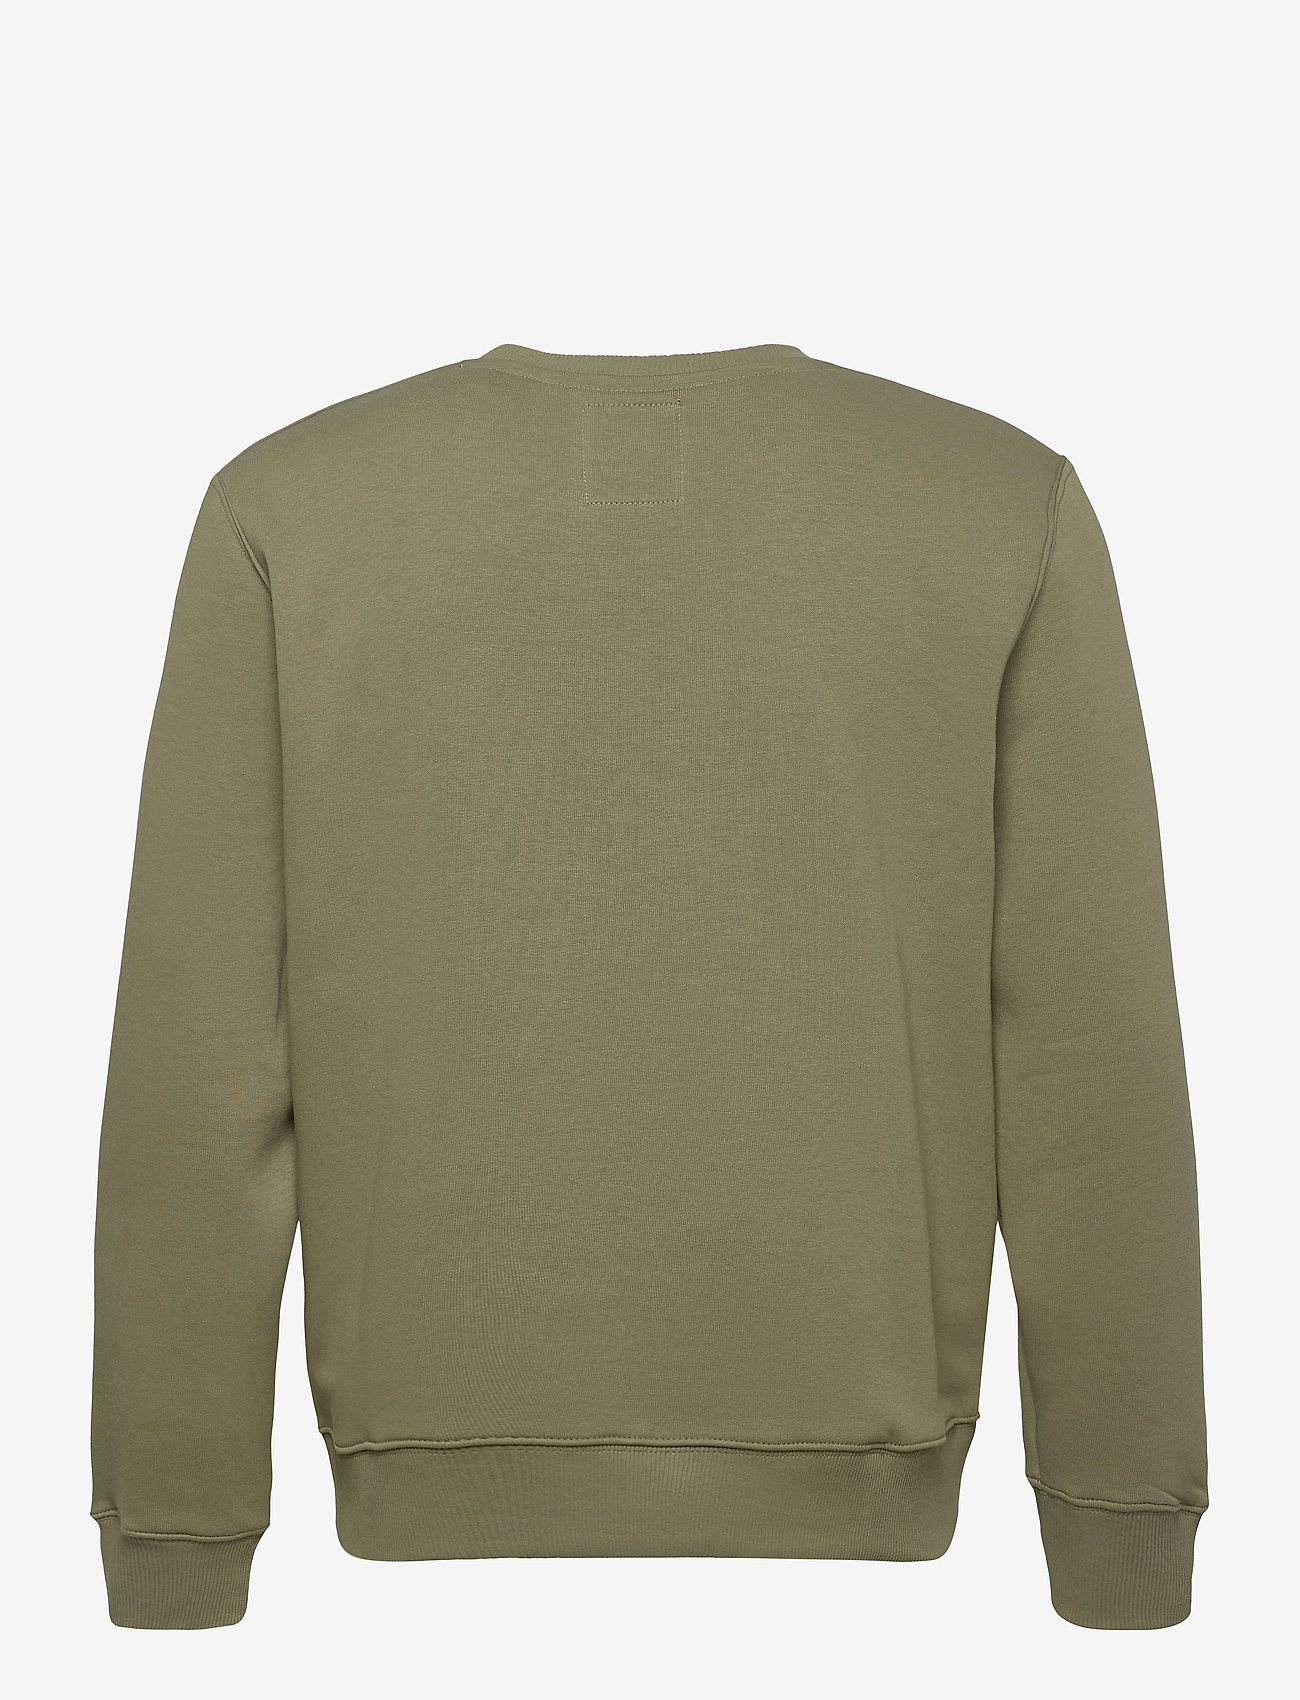 Alpha Industries - Basic Sweater - hoodies - olive - 1